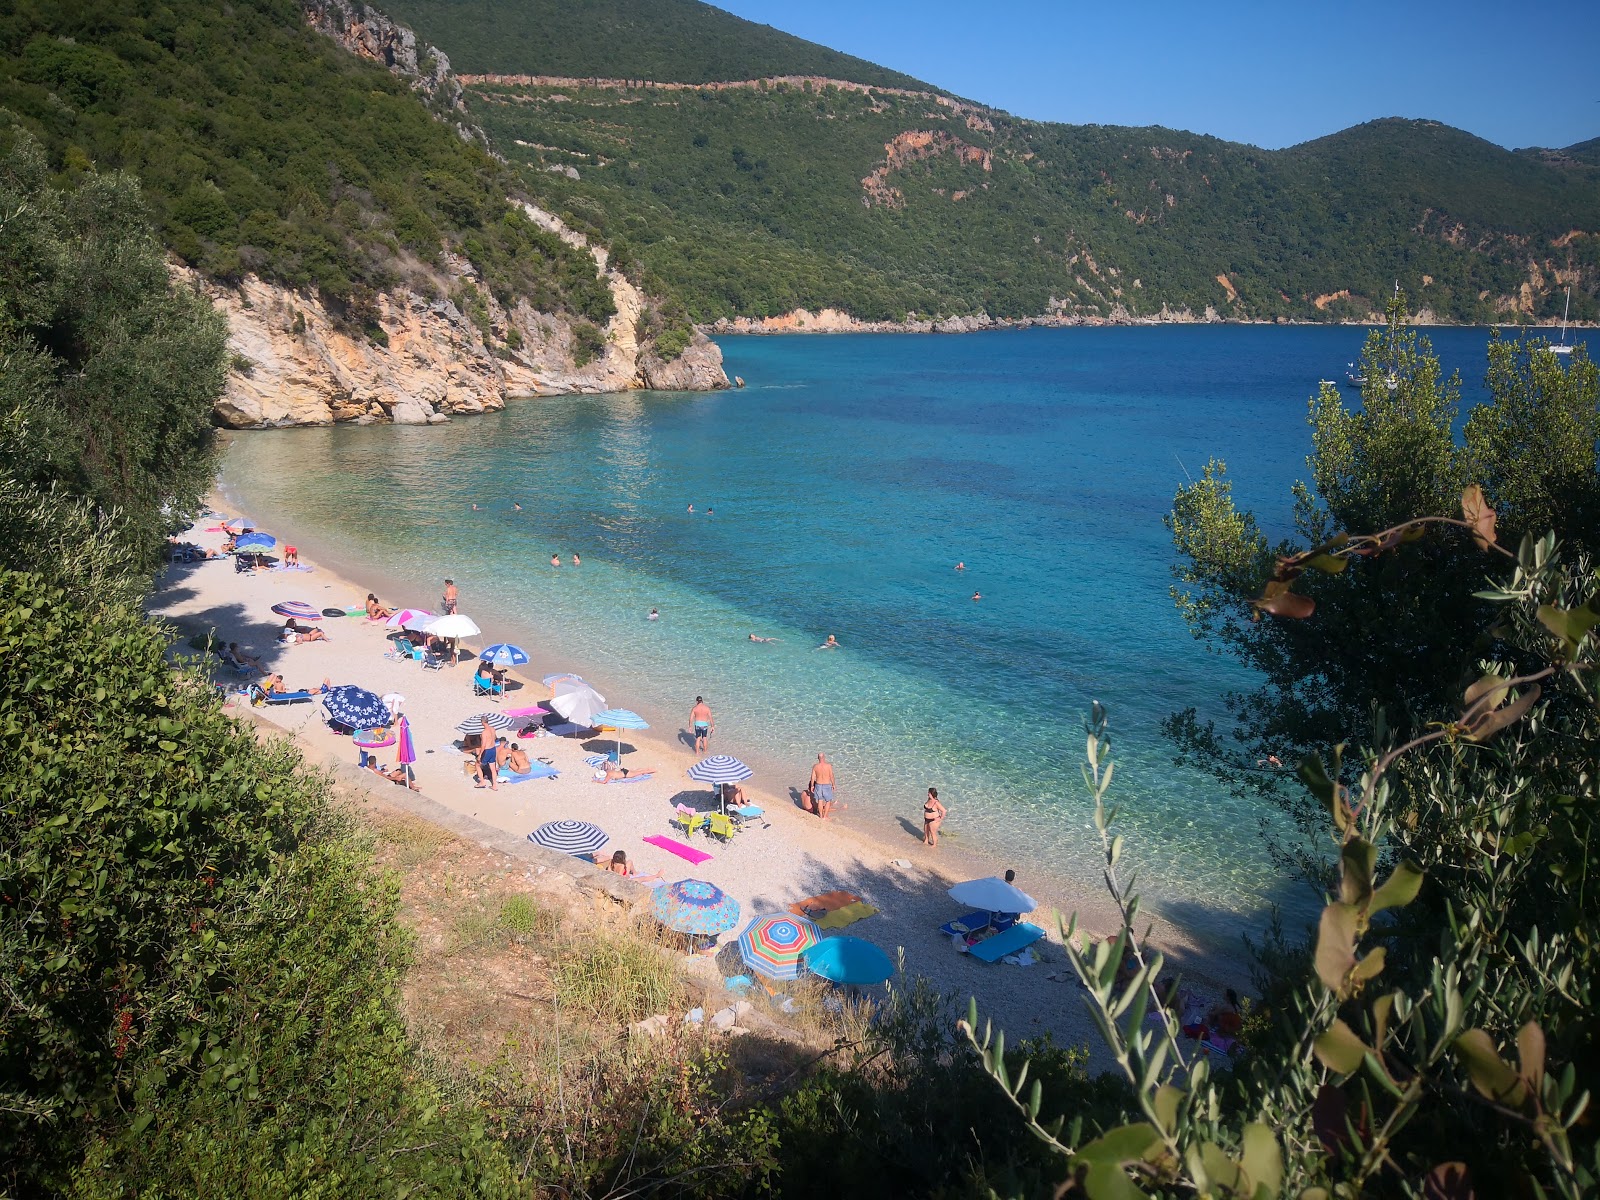 Photo of Agios Giannakis located in natural area